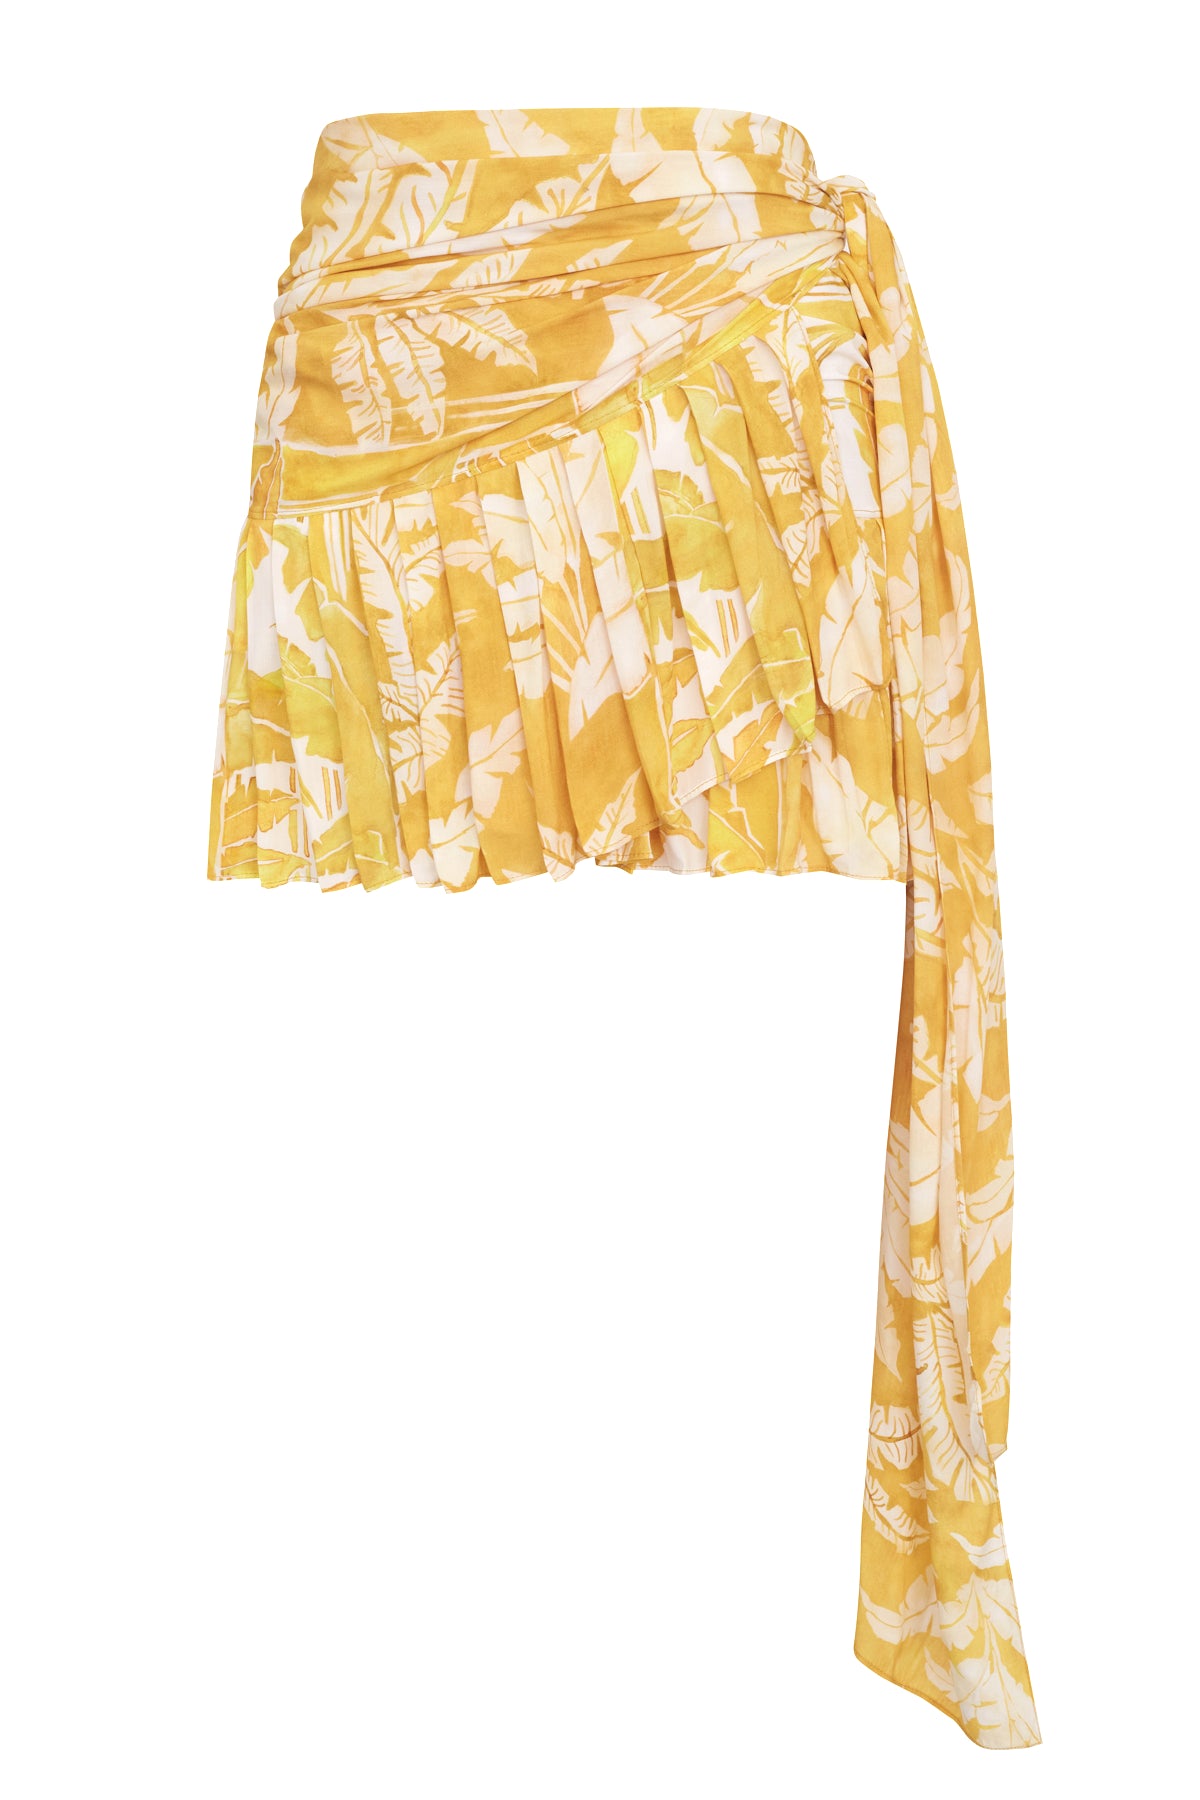 Tropical Leaves Short Skirt Product